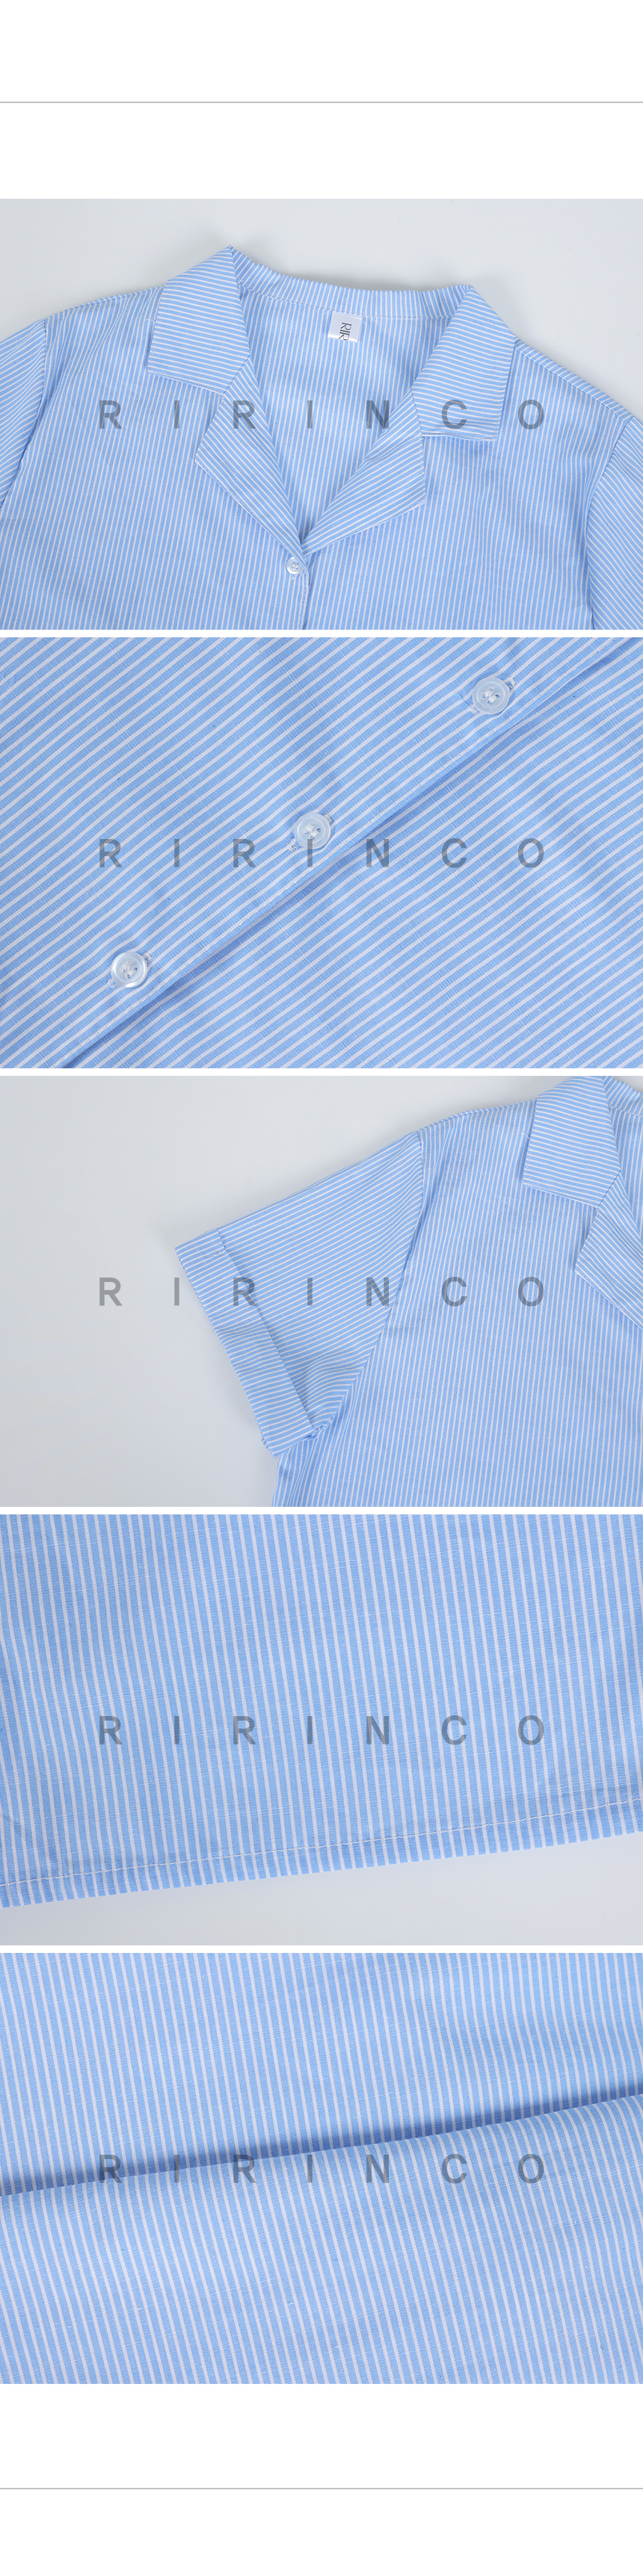 RIRINCO ストライプ柄ロールアップ開襟半袖シャツ